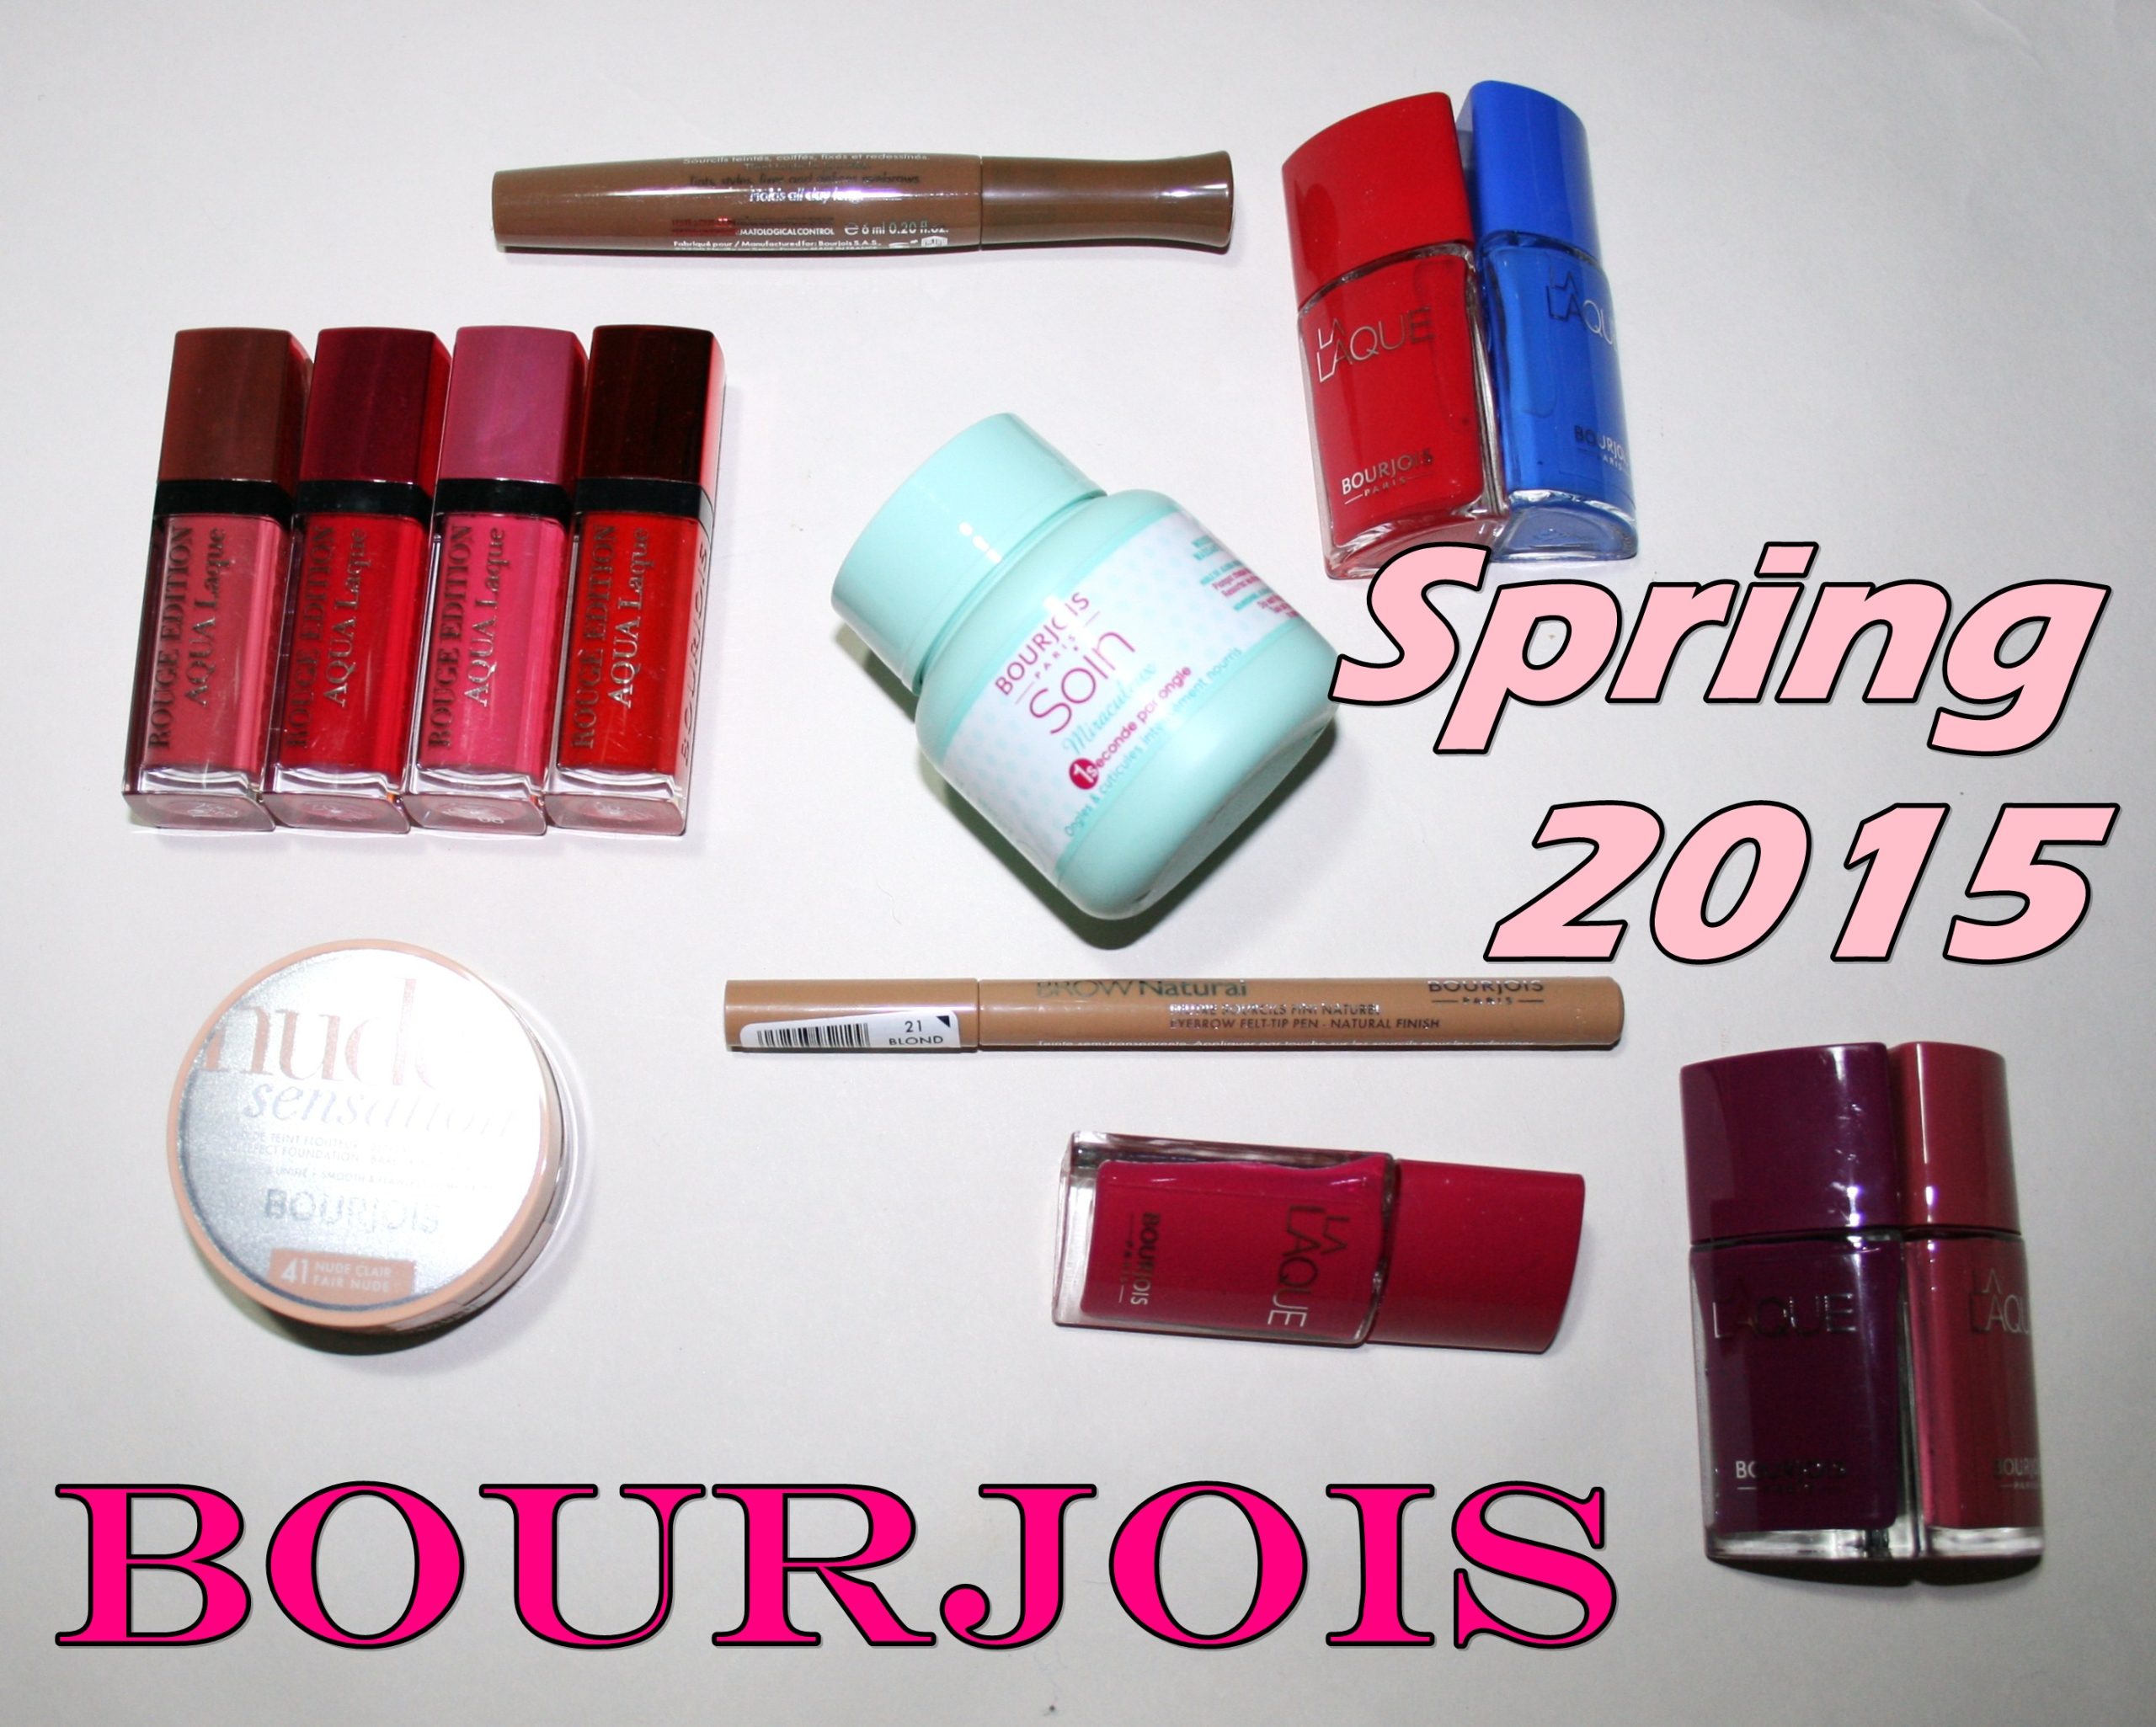 Bourjois Spring Launches 2015